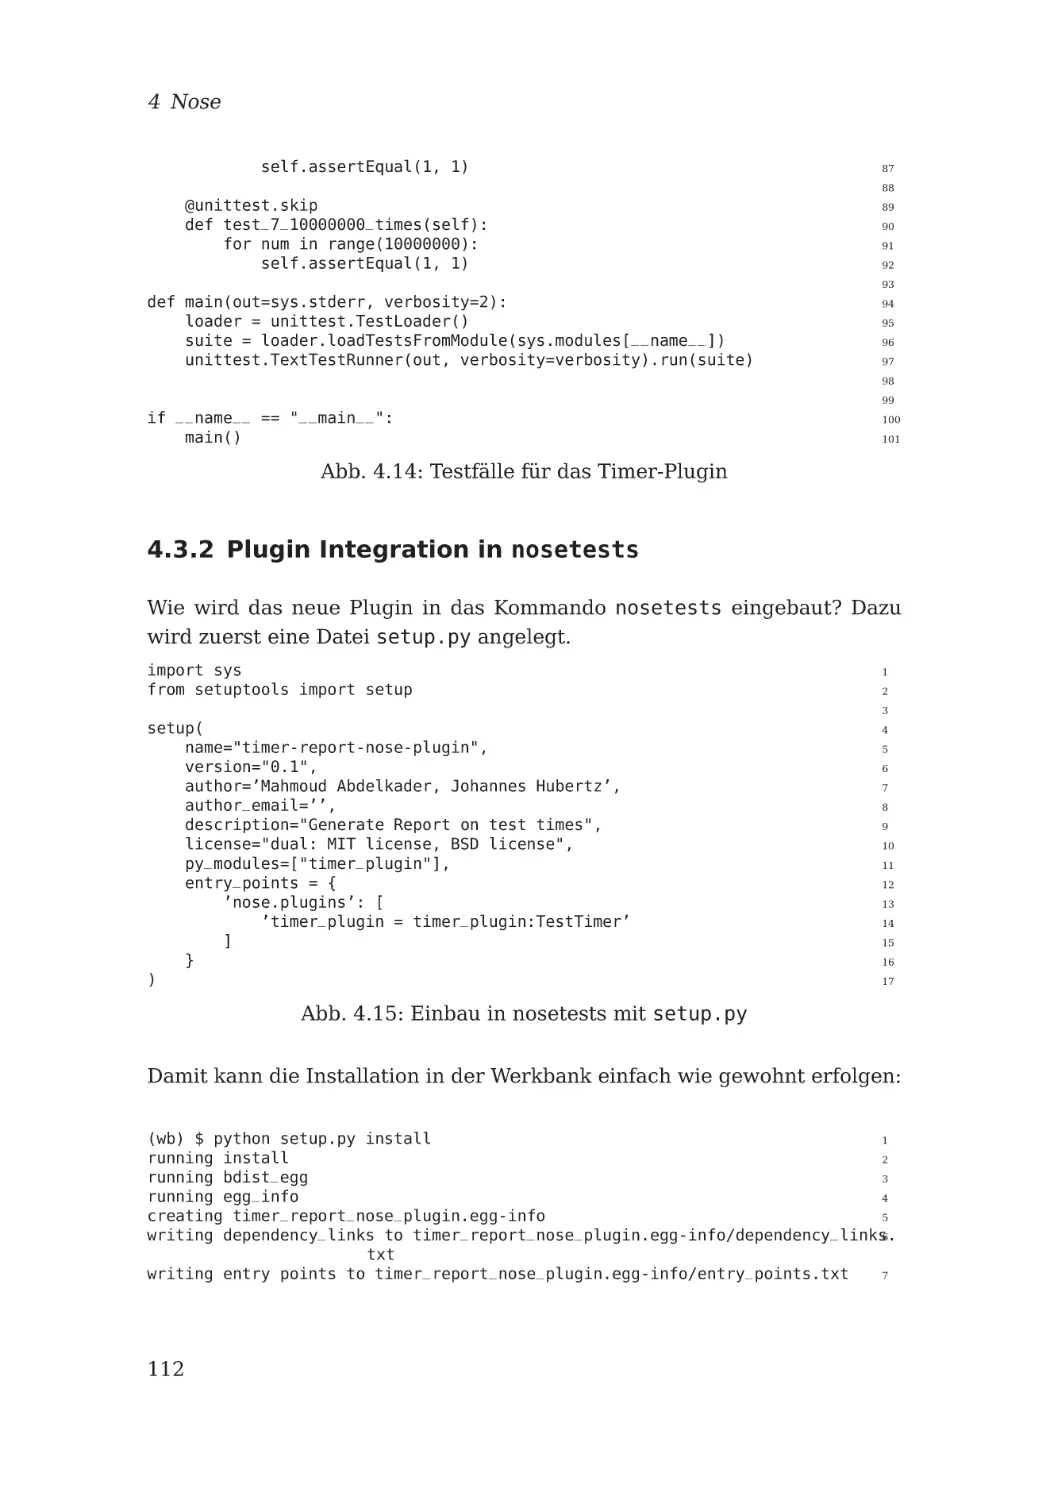 4.3.2 Plugin Integration in nosetests